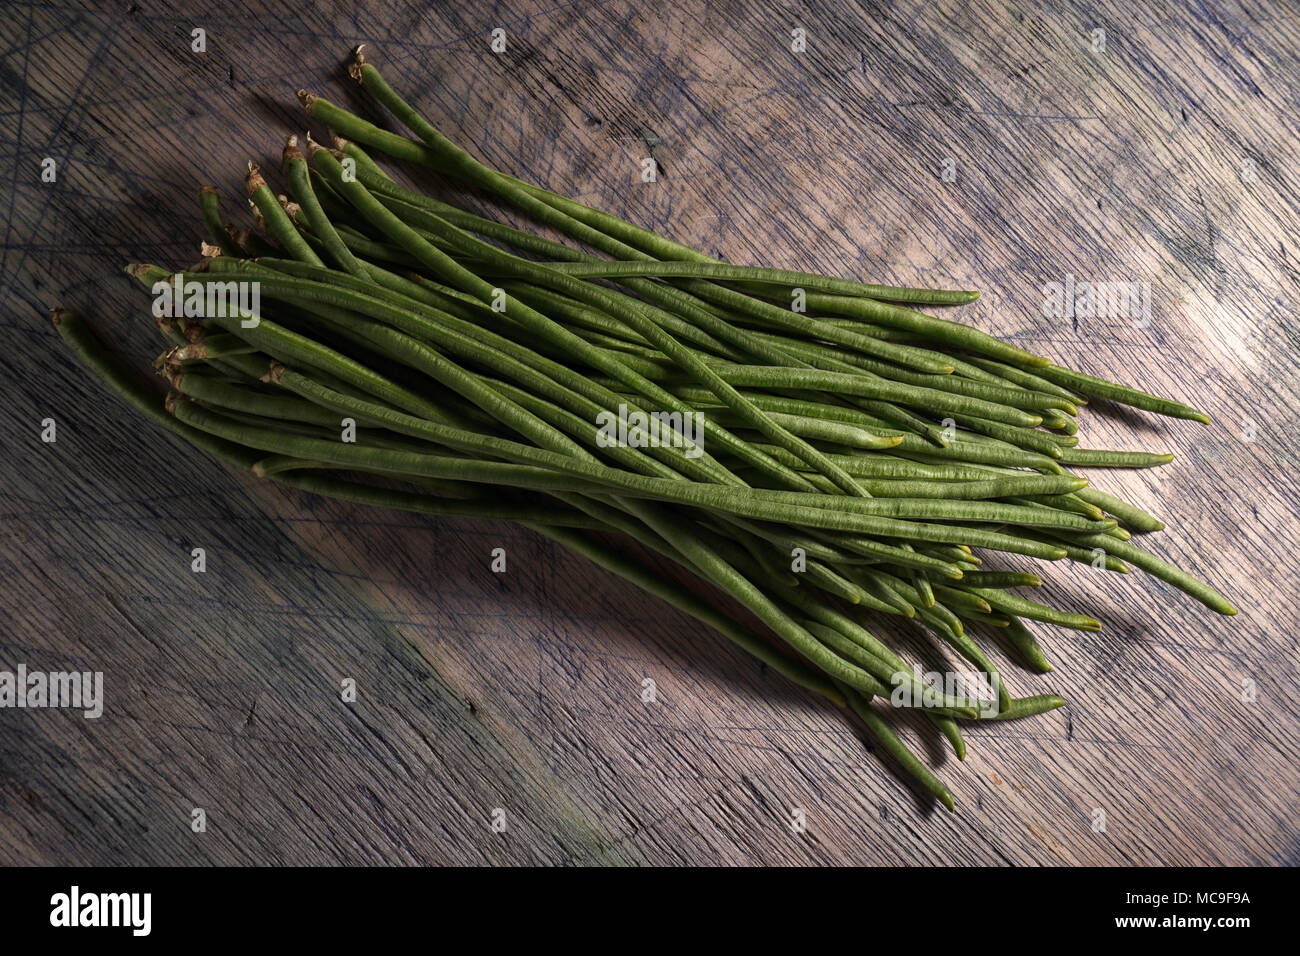 chinese yard-long long beans bundle on wood surface Stock Photo